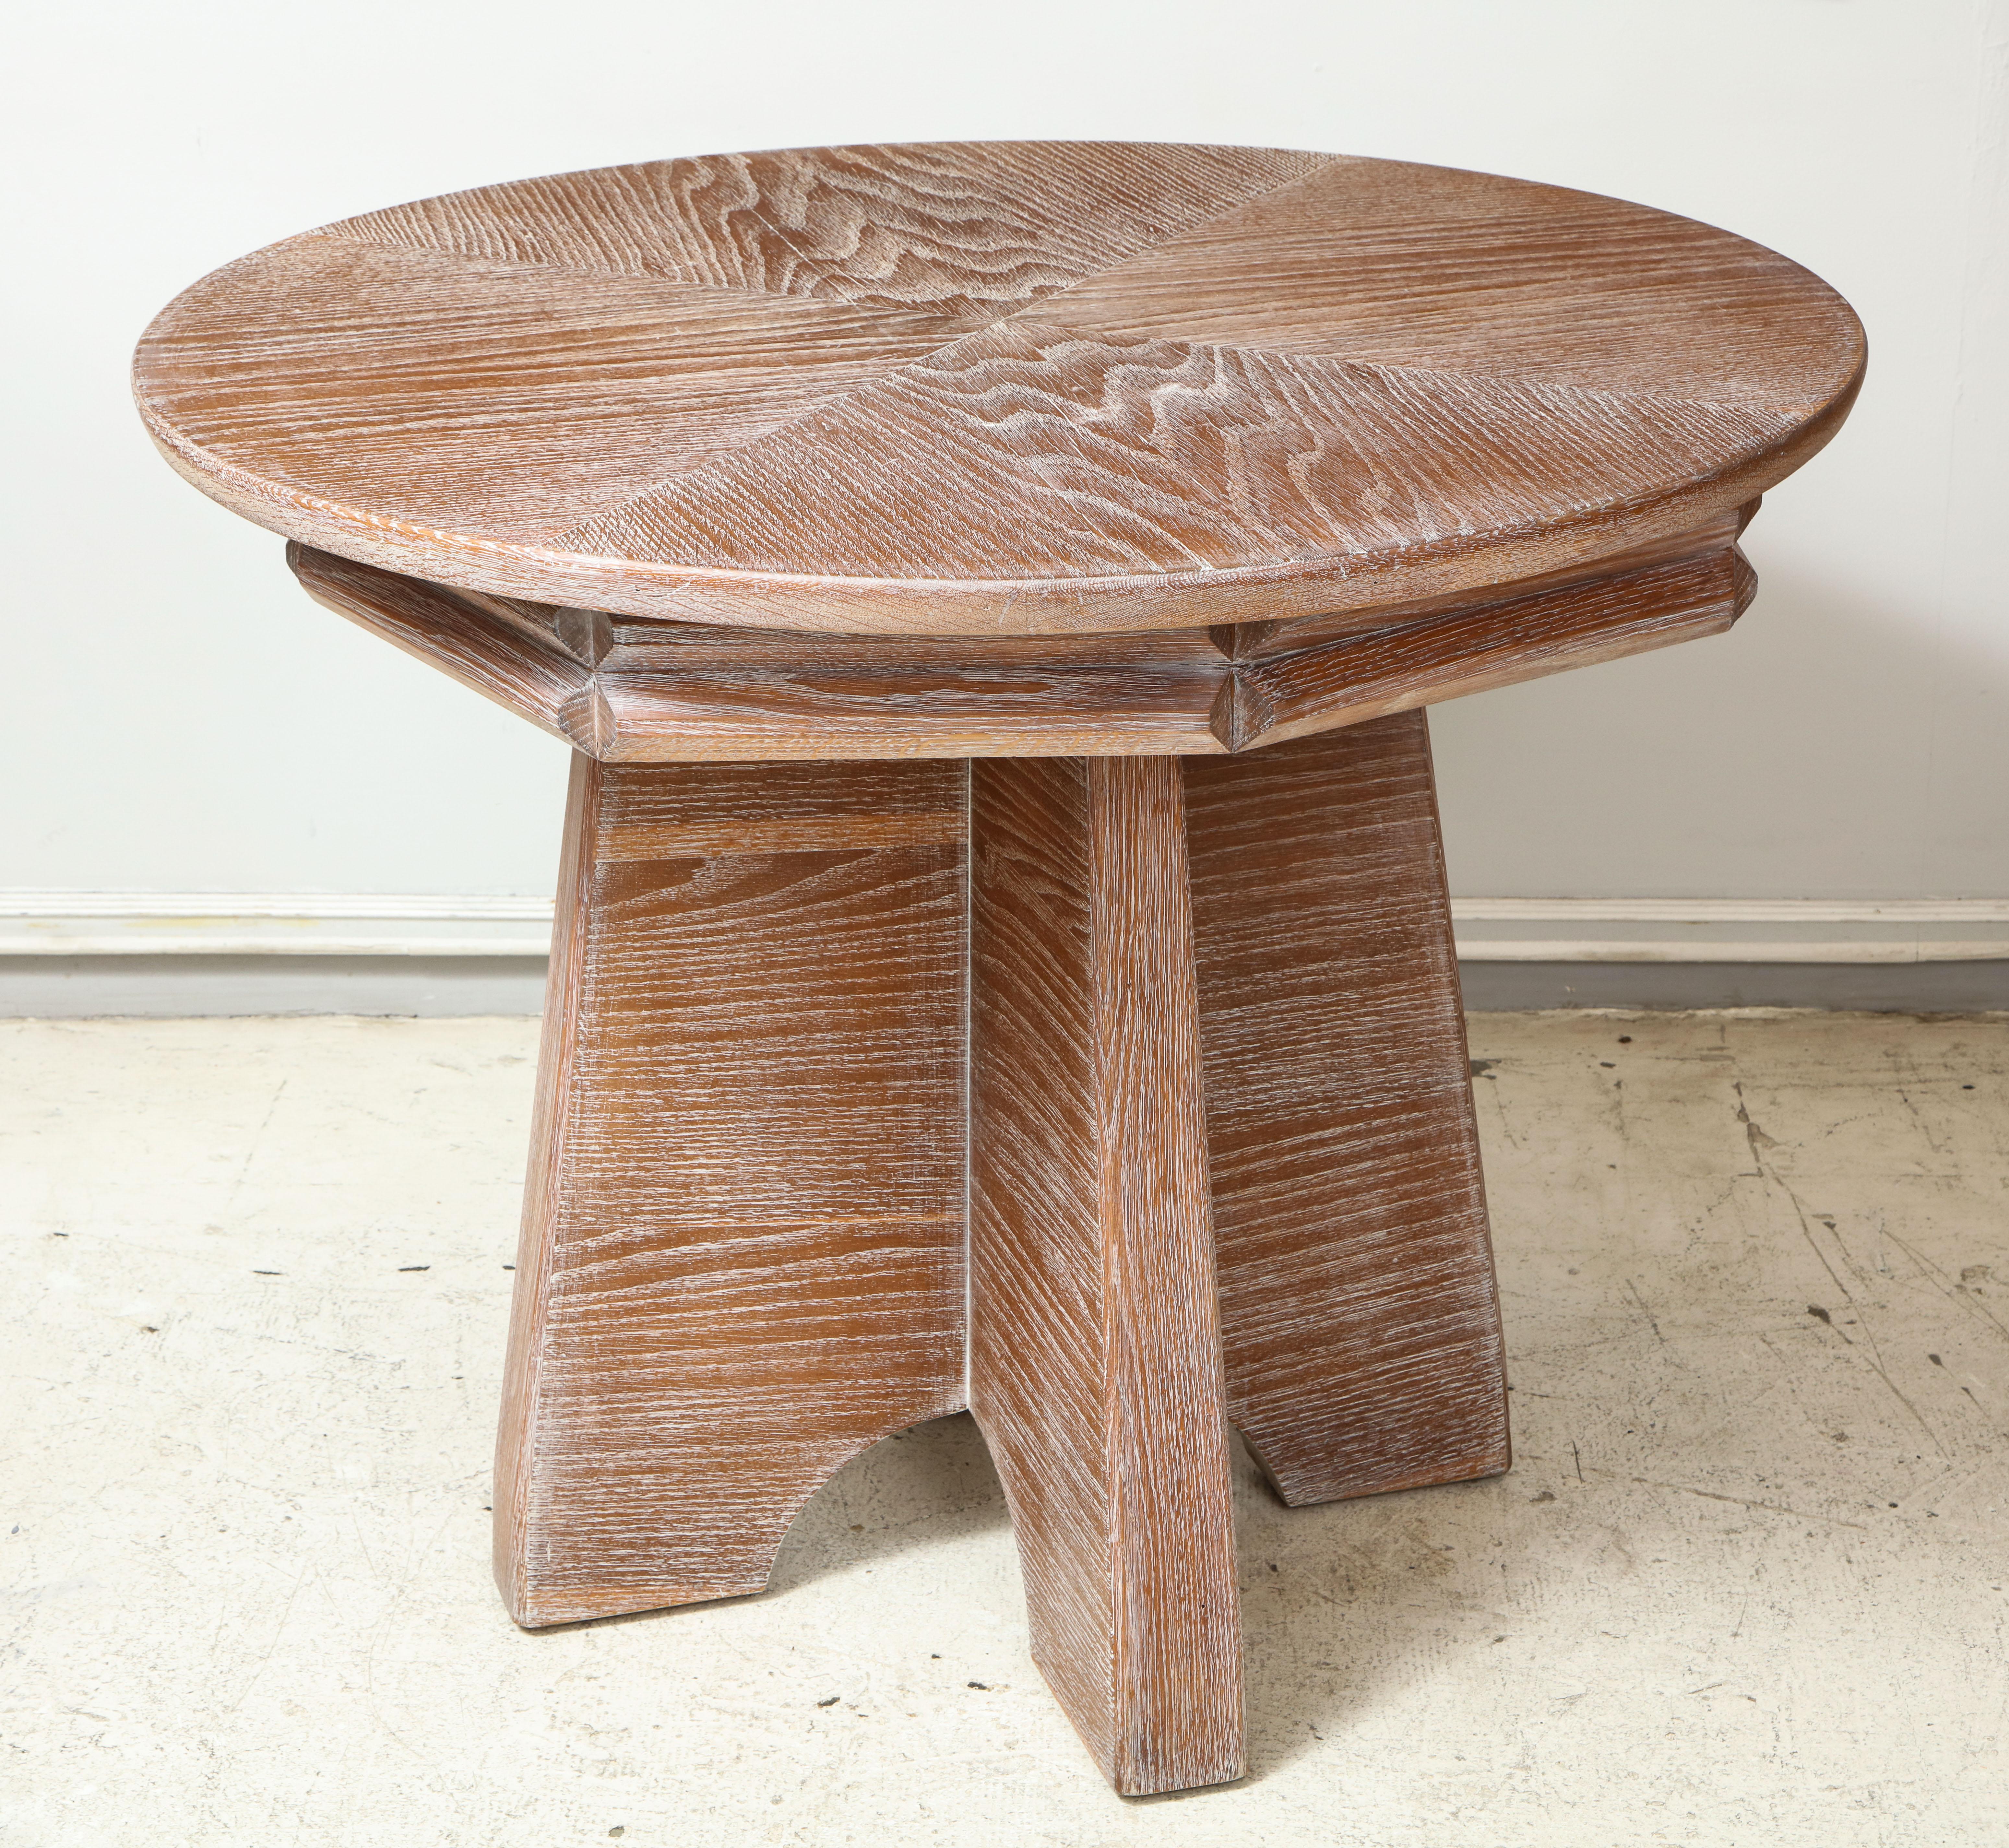 Sculptural Italian cerused oak center table, circa 1940s.